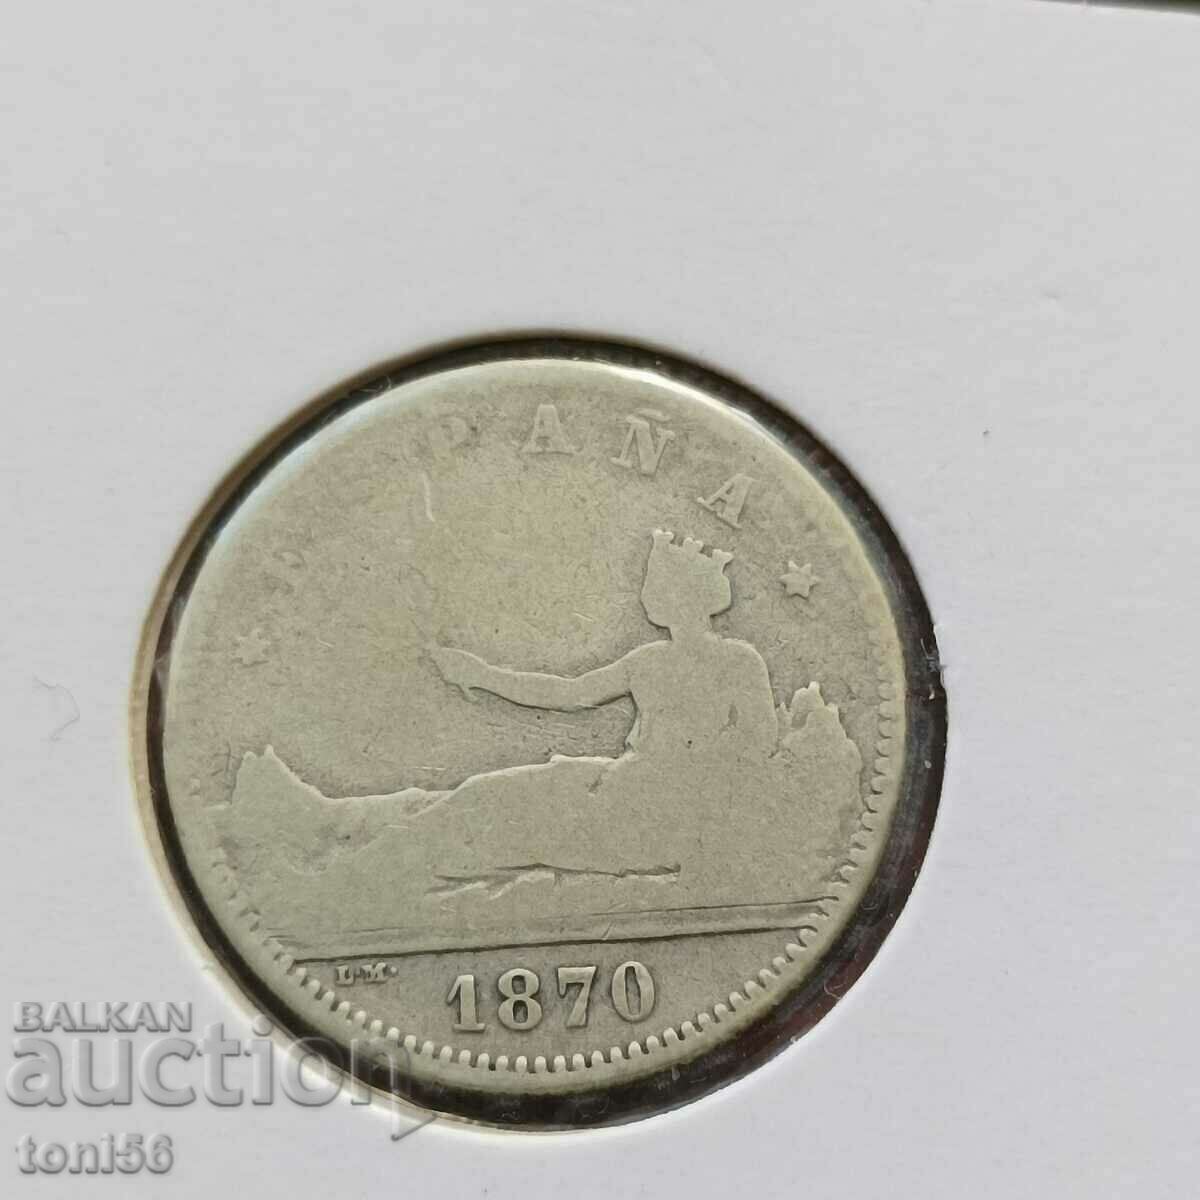 Spania 1 peseta 1870 - argint